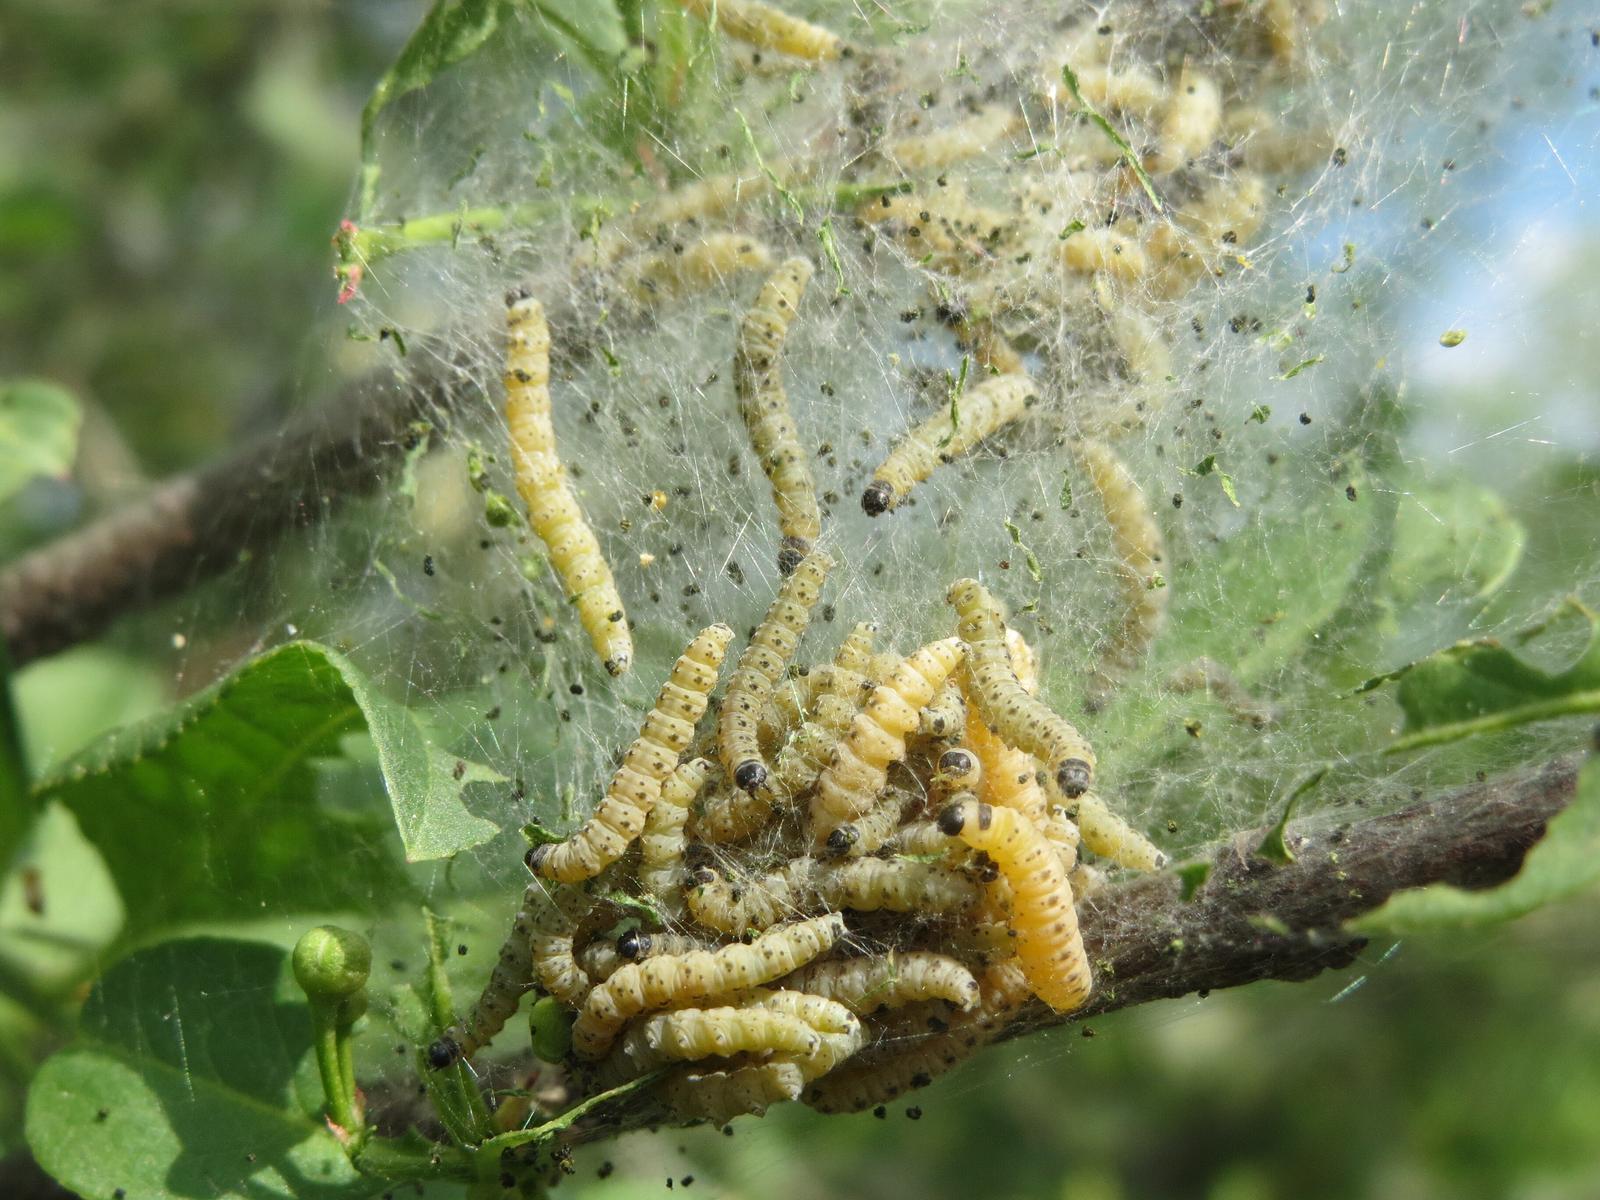 Ermine moth larvae and eggs